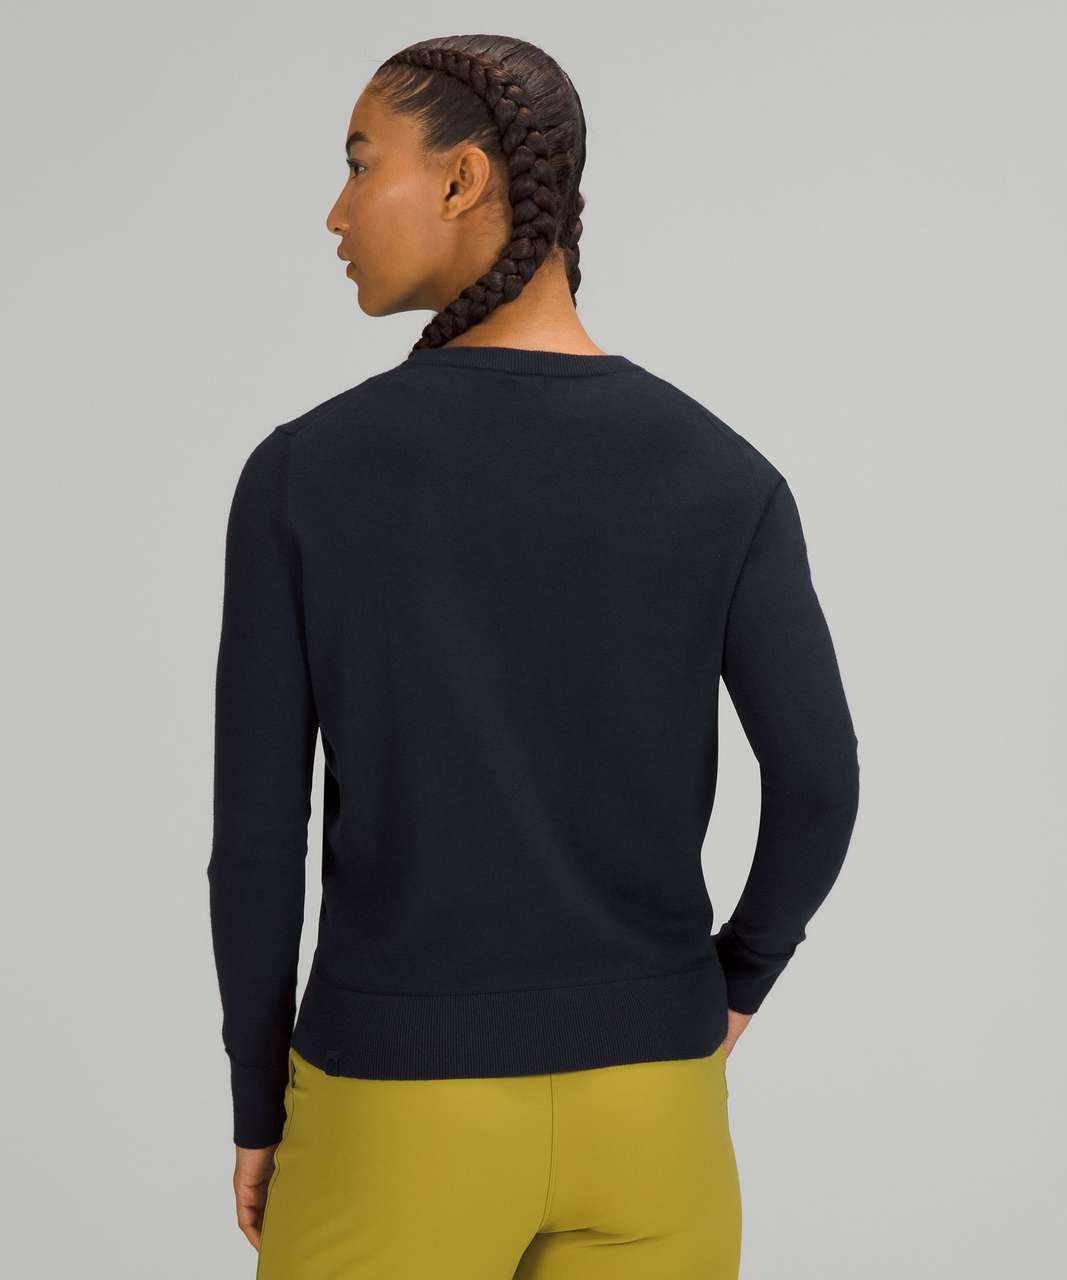 Lululemon Cotton-Cashmere Blend Sweater - True Navy